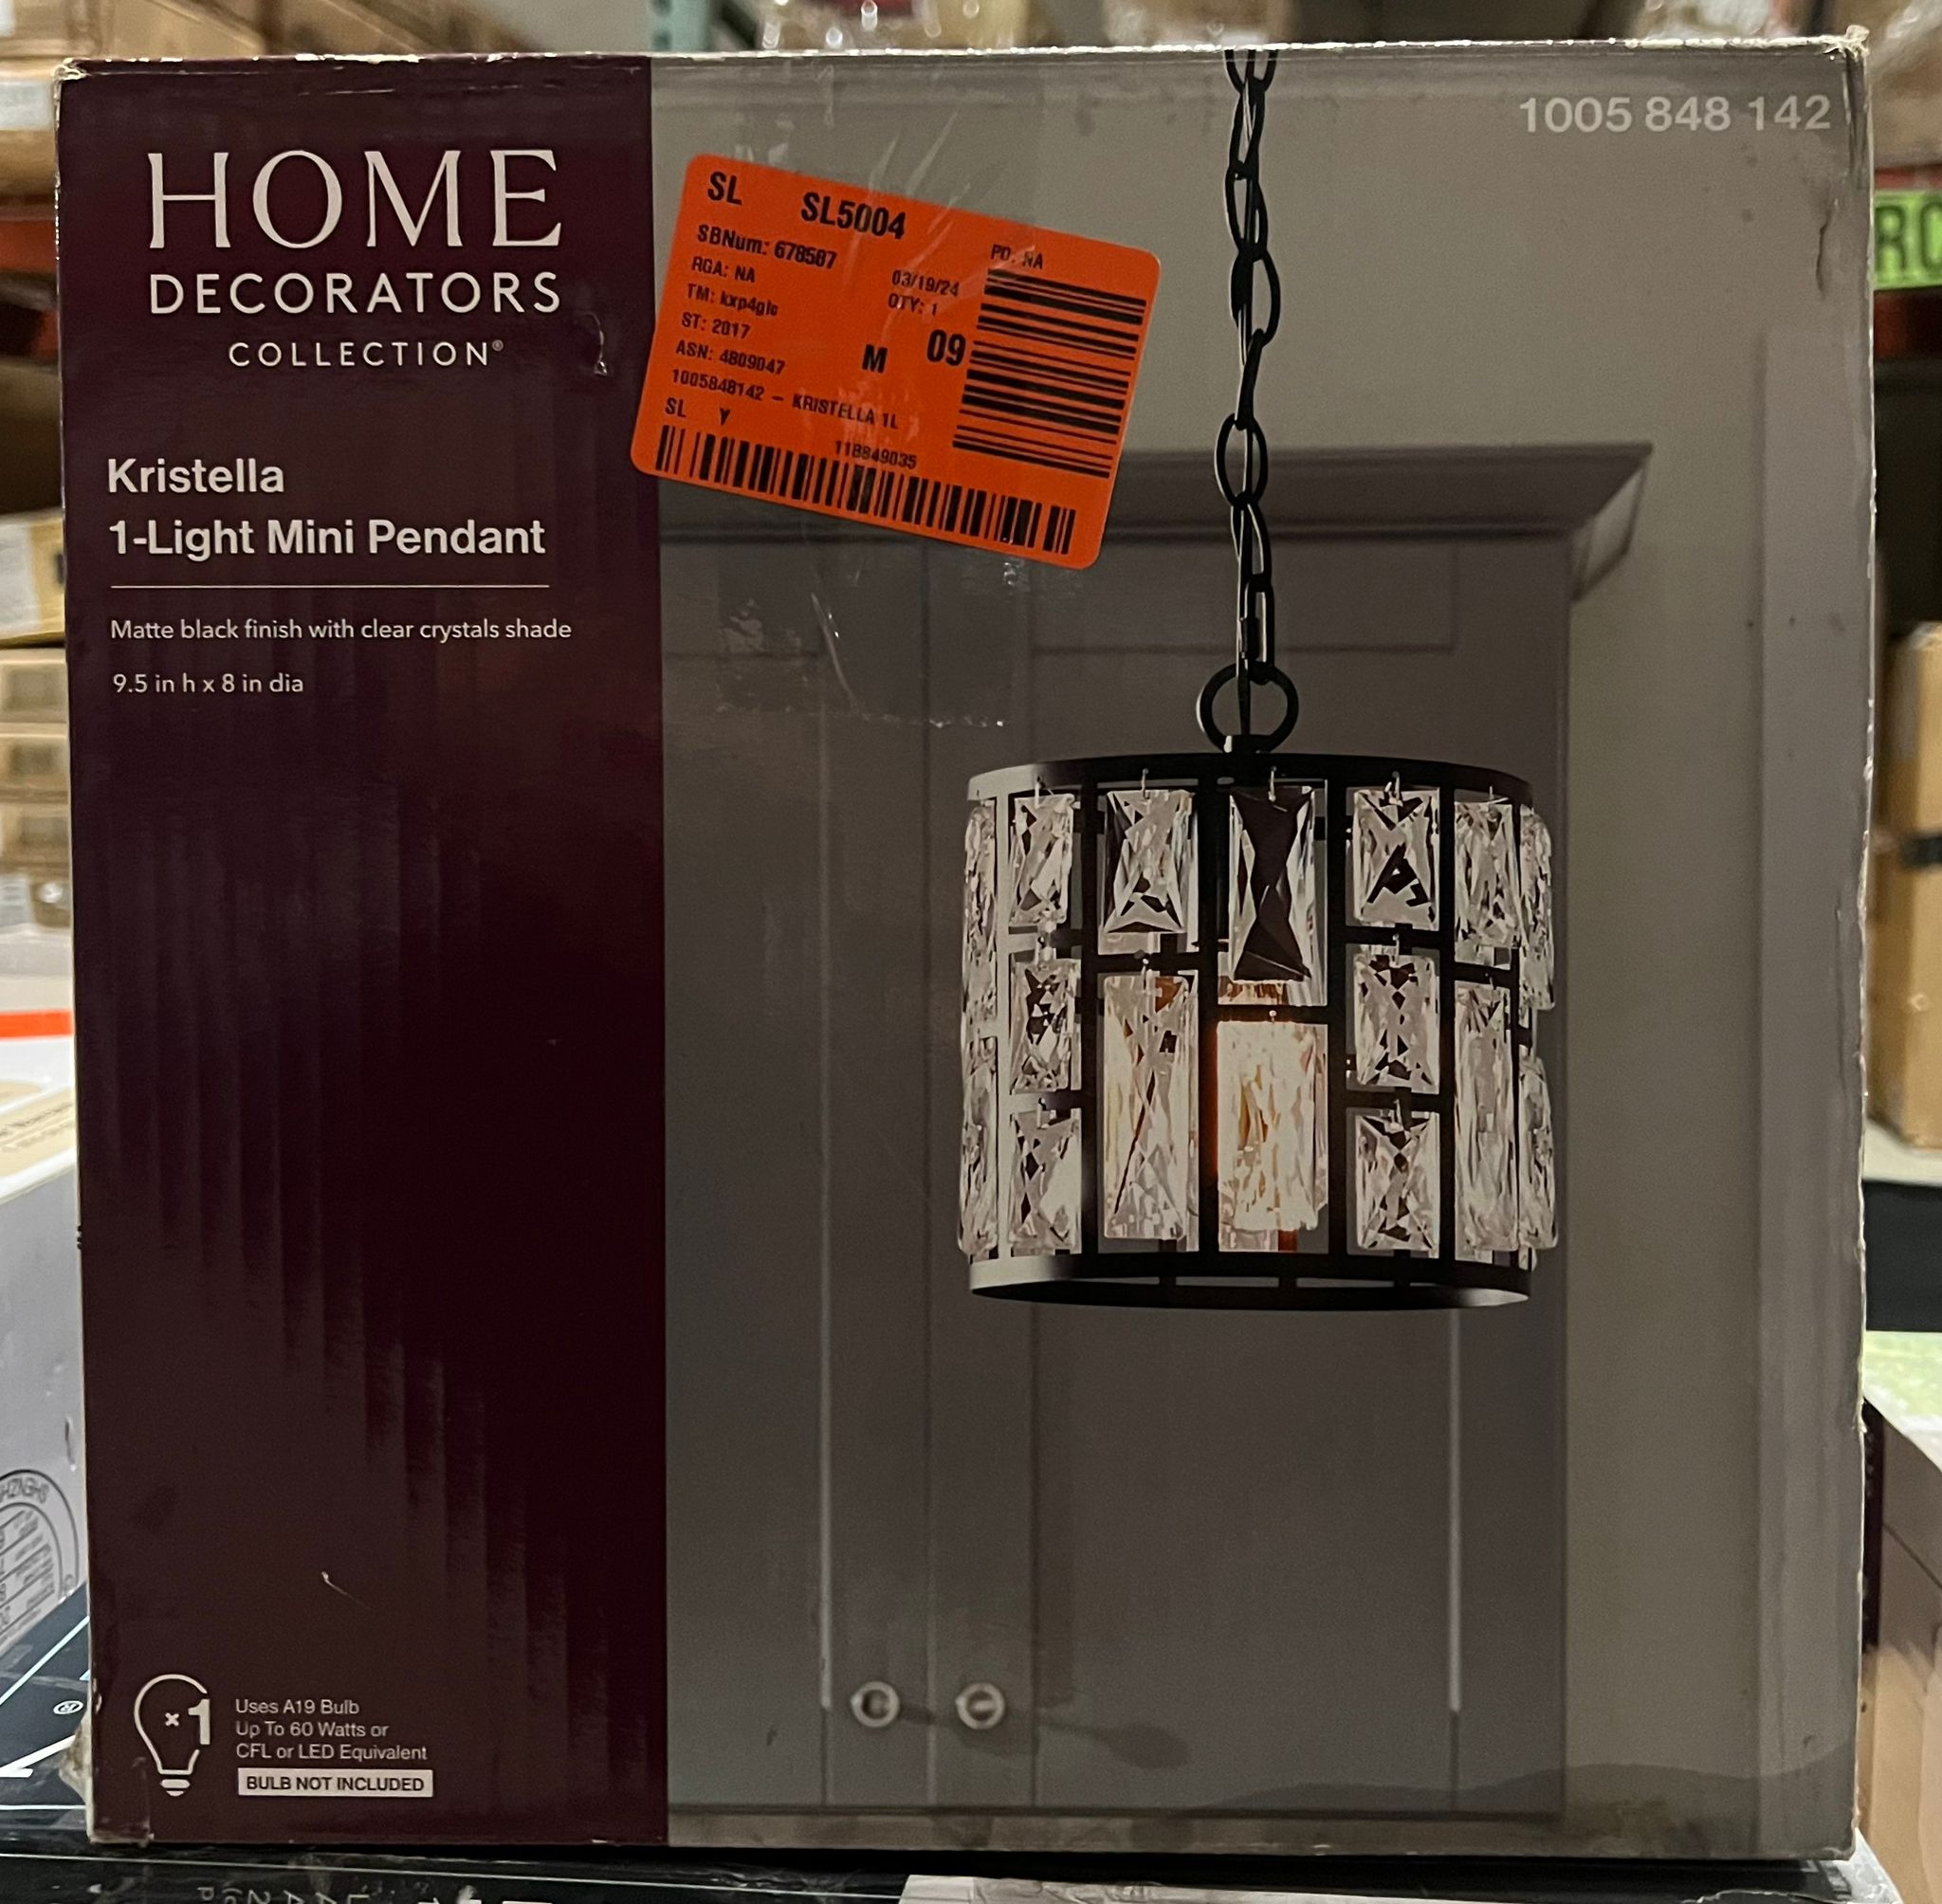 Home Decorators Collection Kristella 1-Light Black Crystal Pendant Light - $60